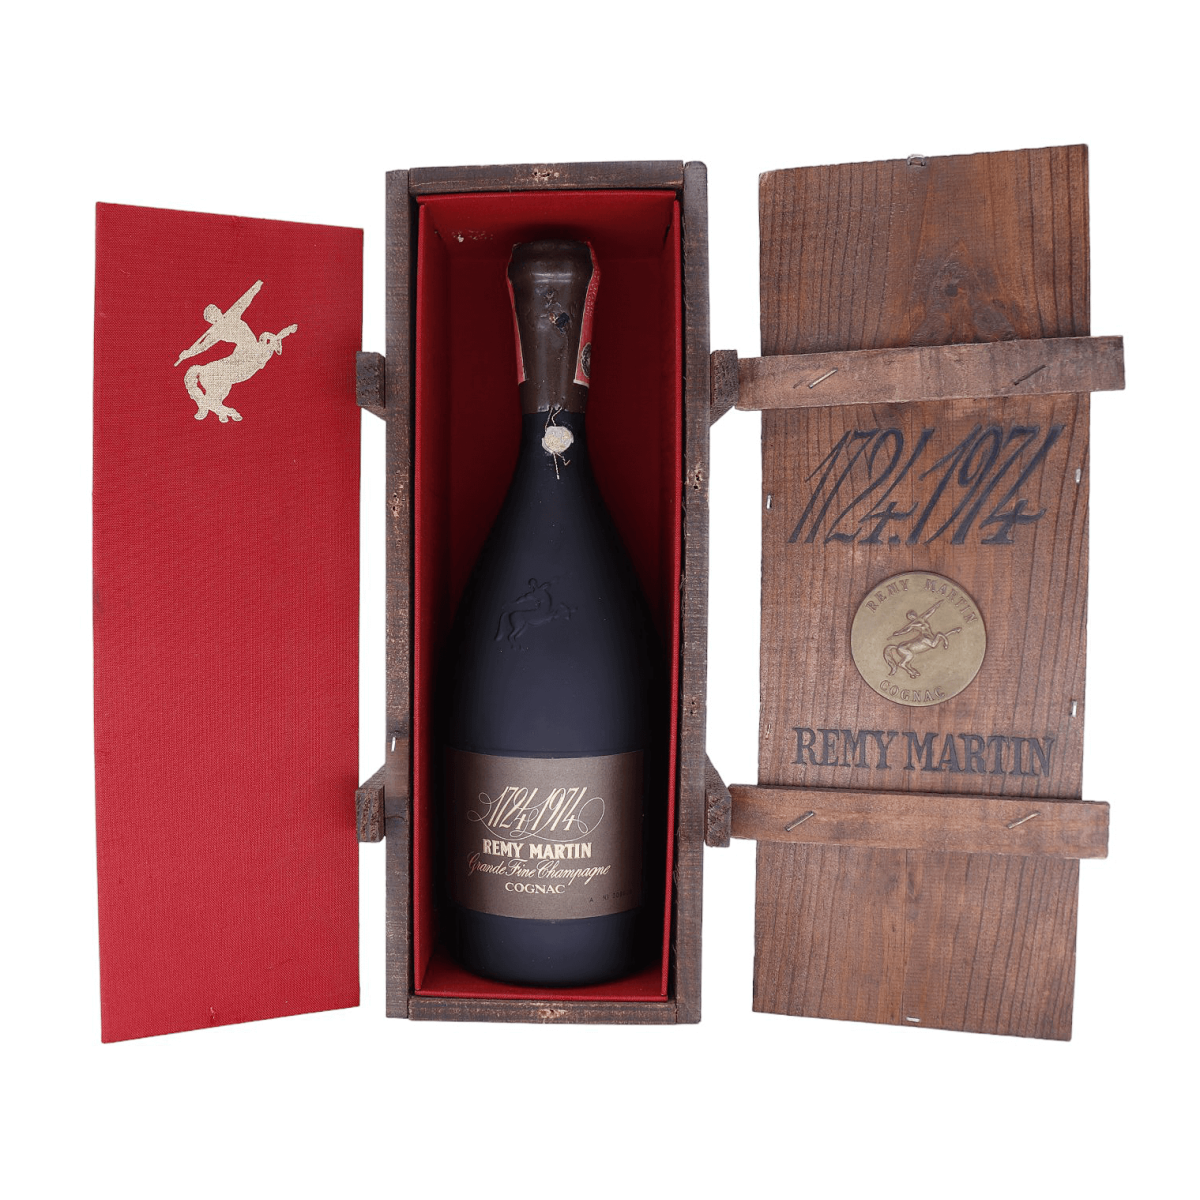 Remy Martin Cognac 250th Anniversary 1724 -1974